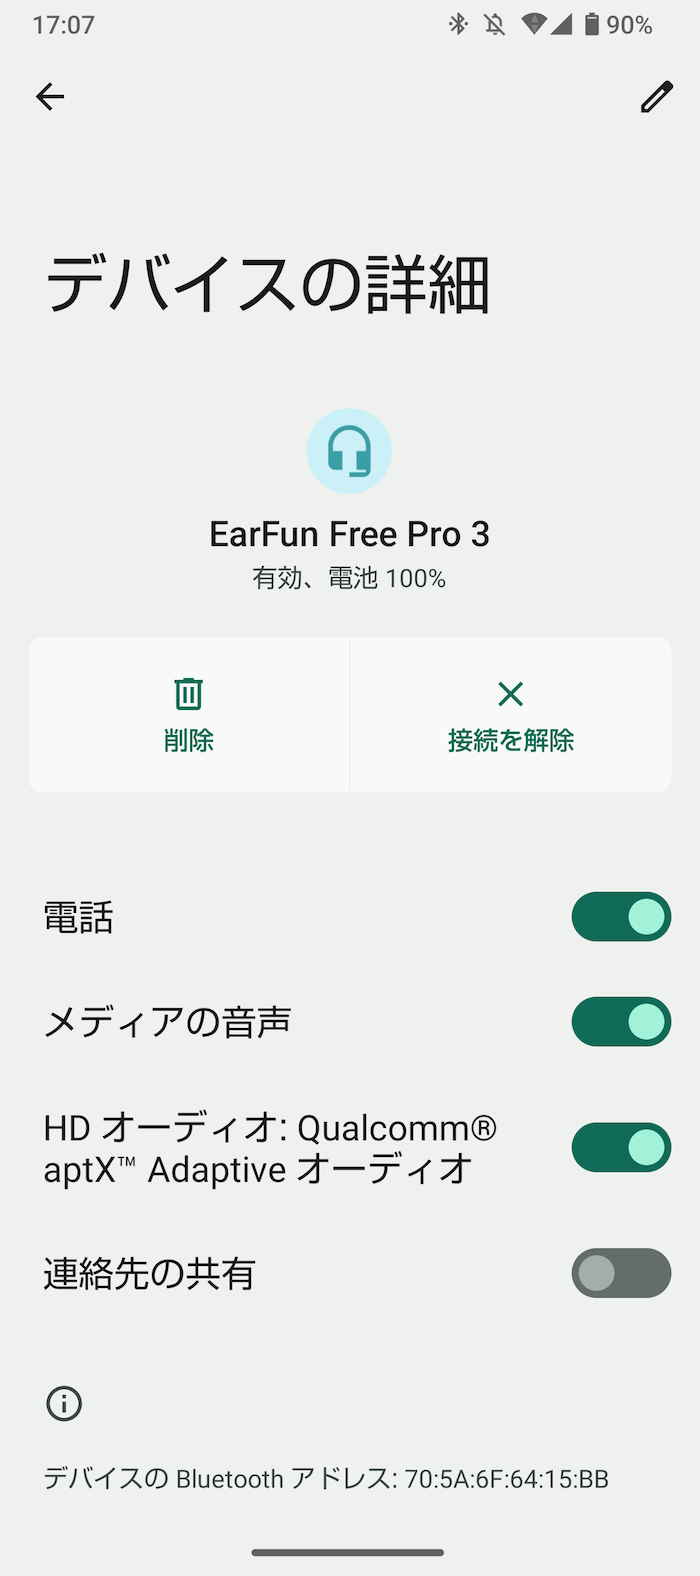 EarFun Free Pro 3はAptX Adaptive対応